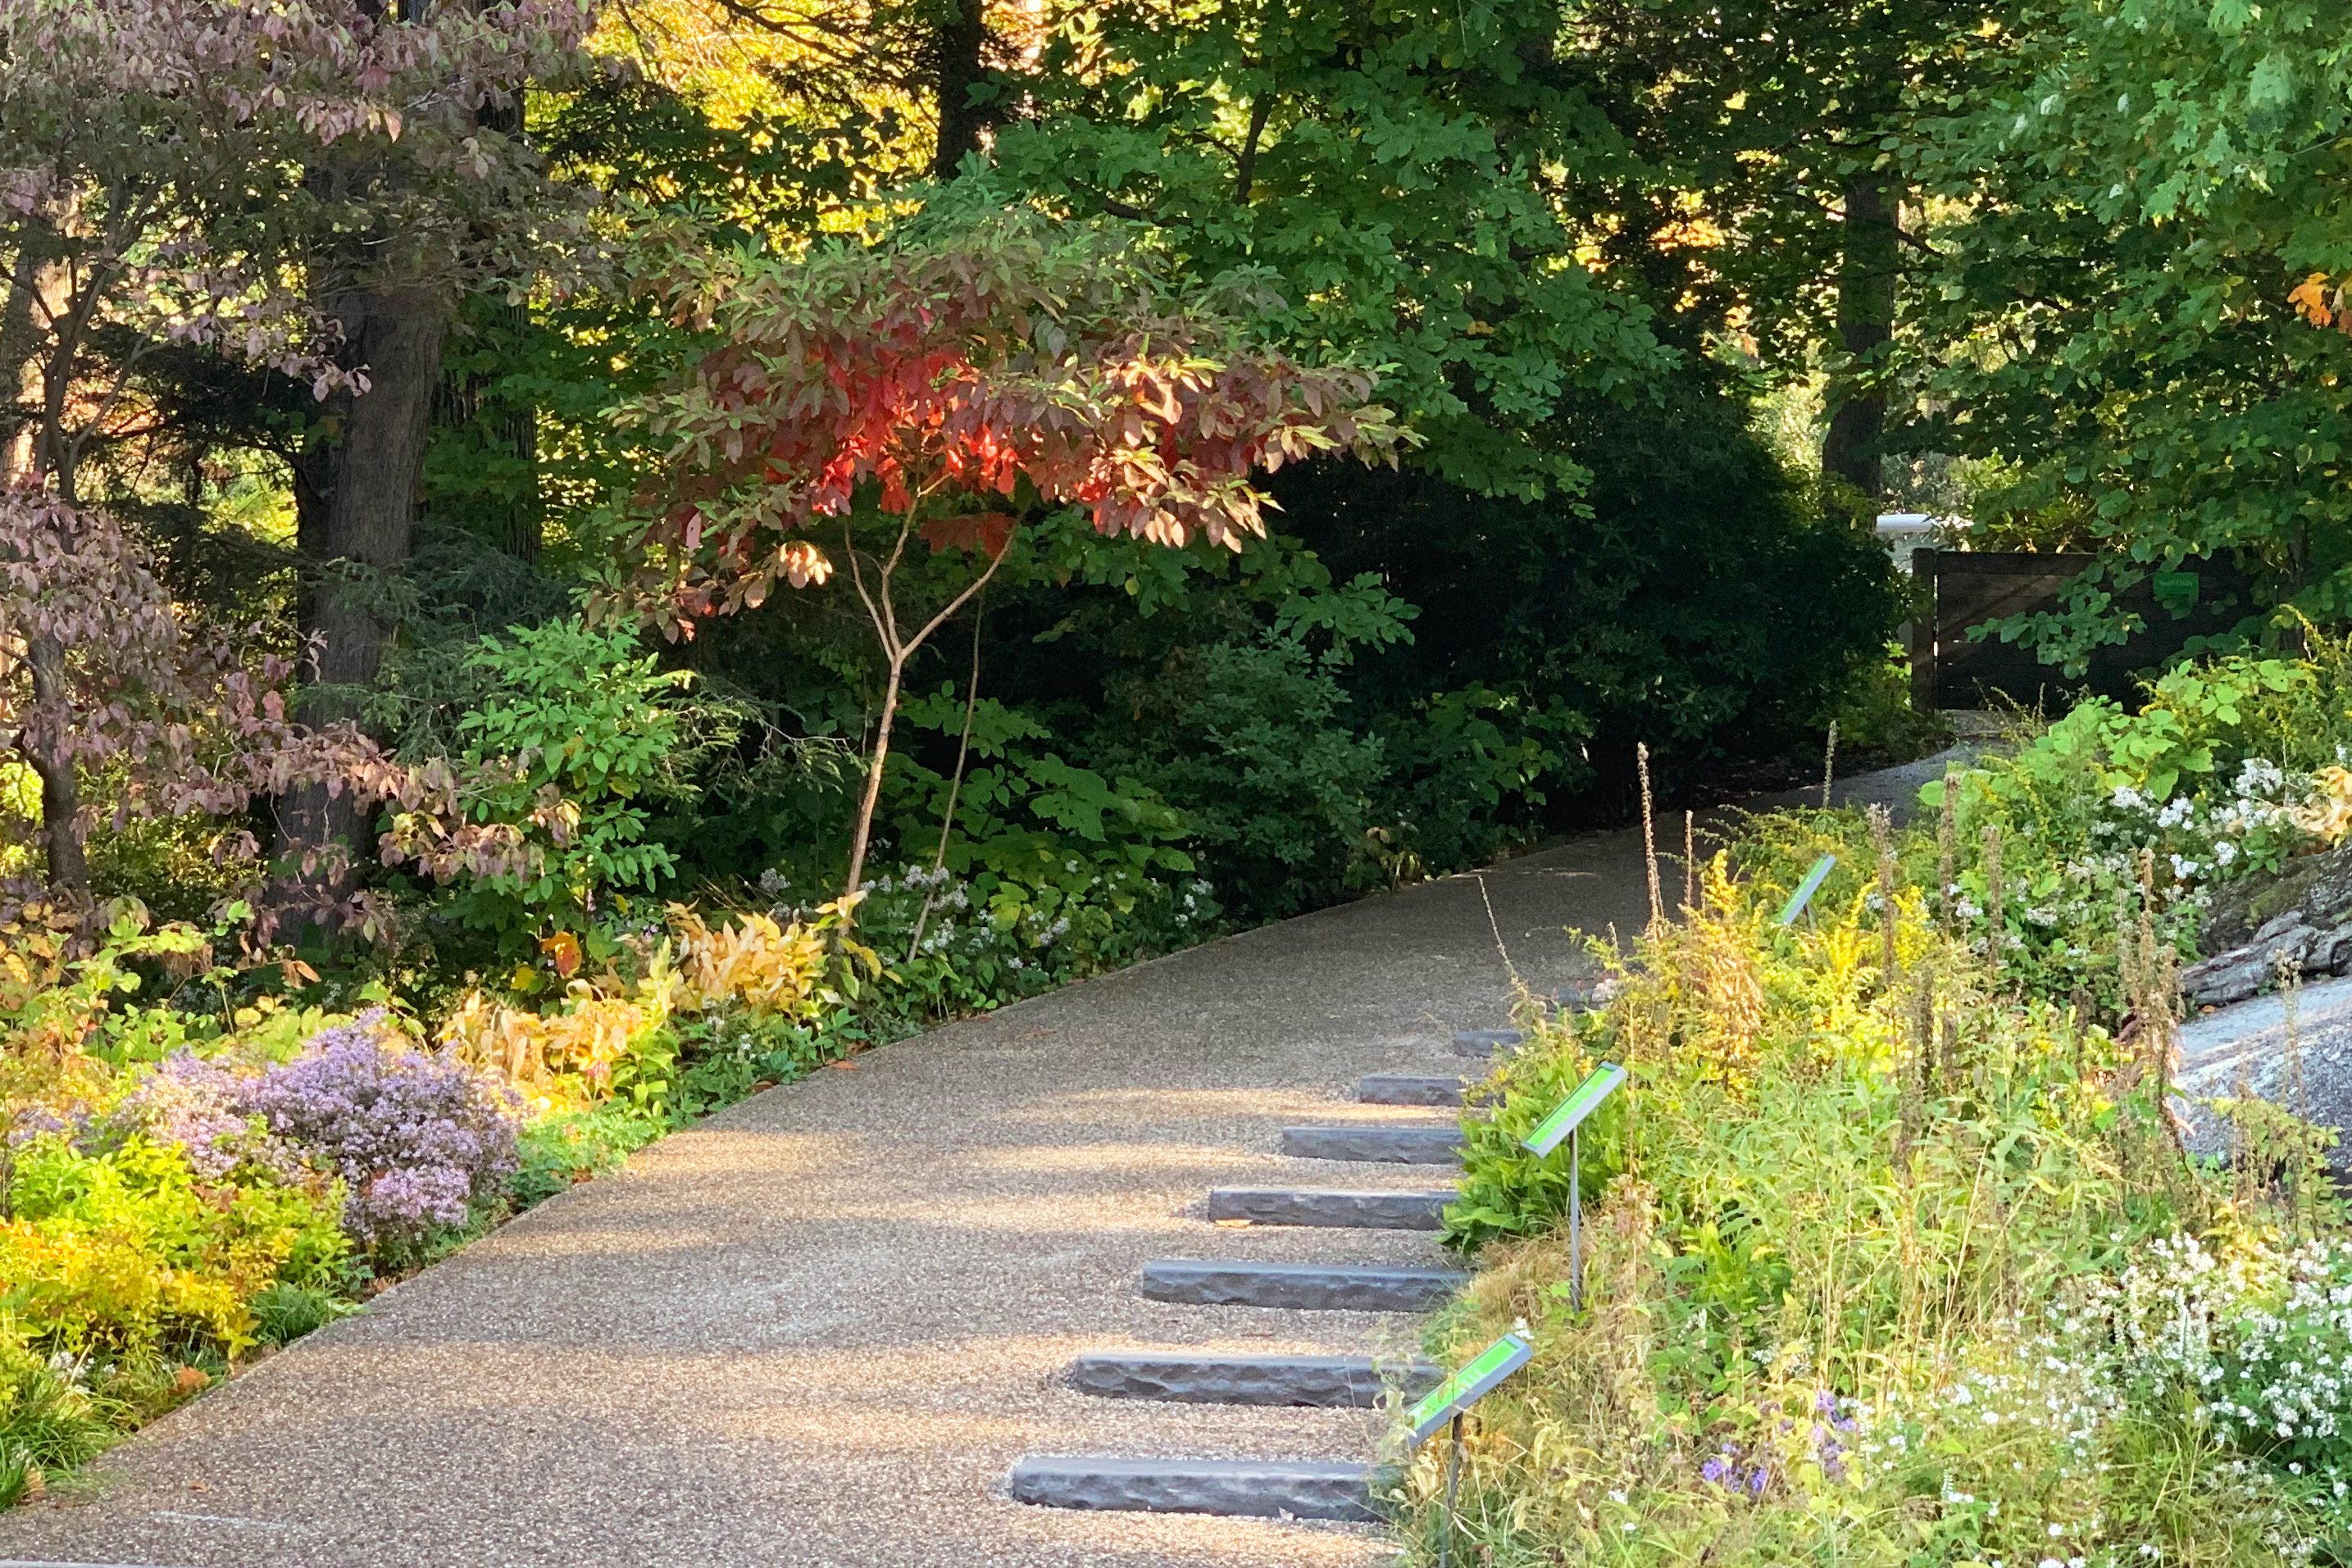 New York Botanical Garden fall foliage 2020